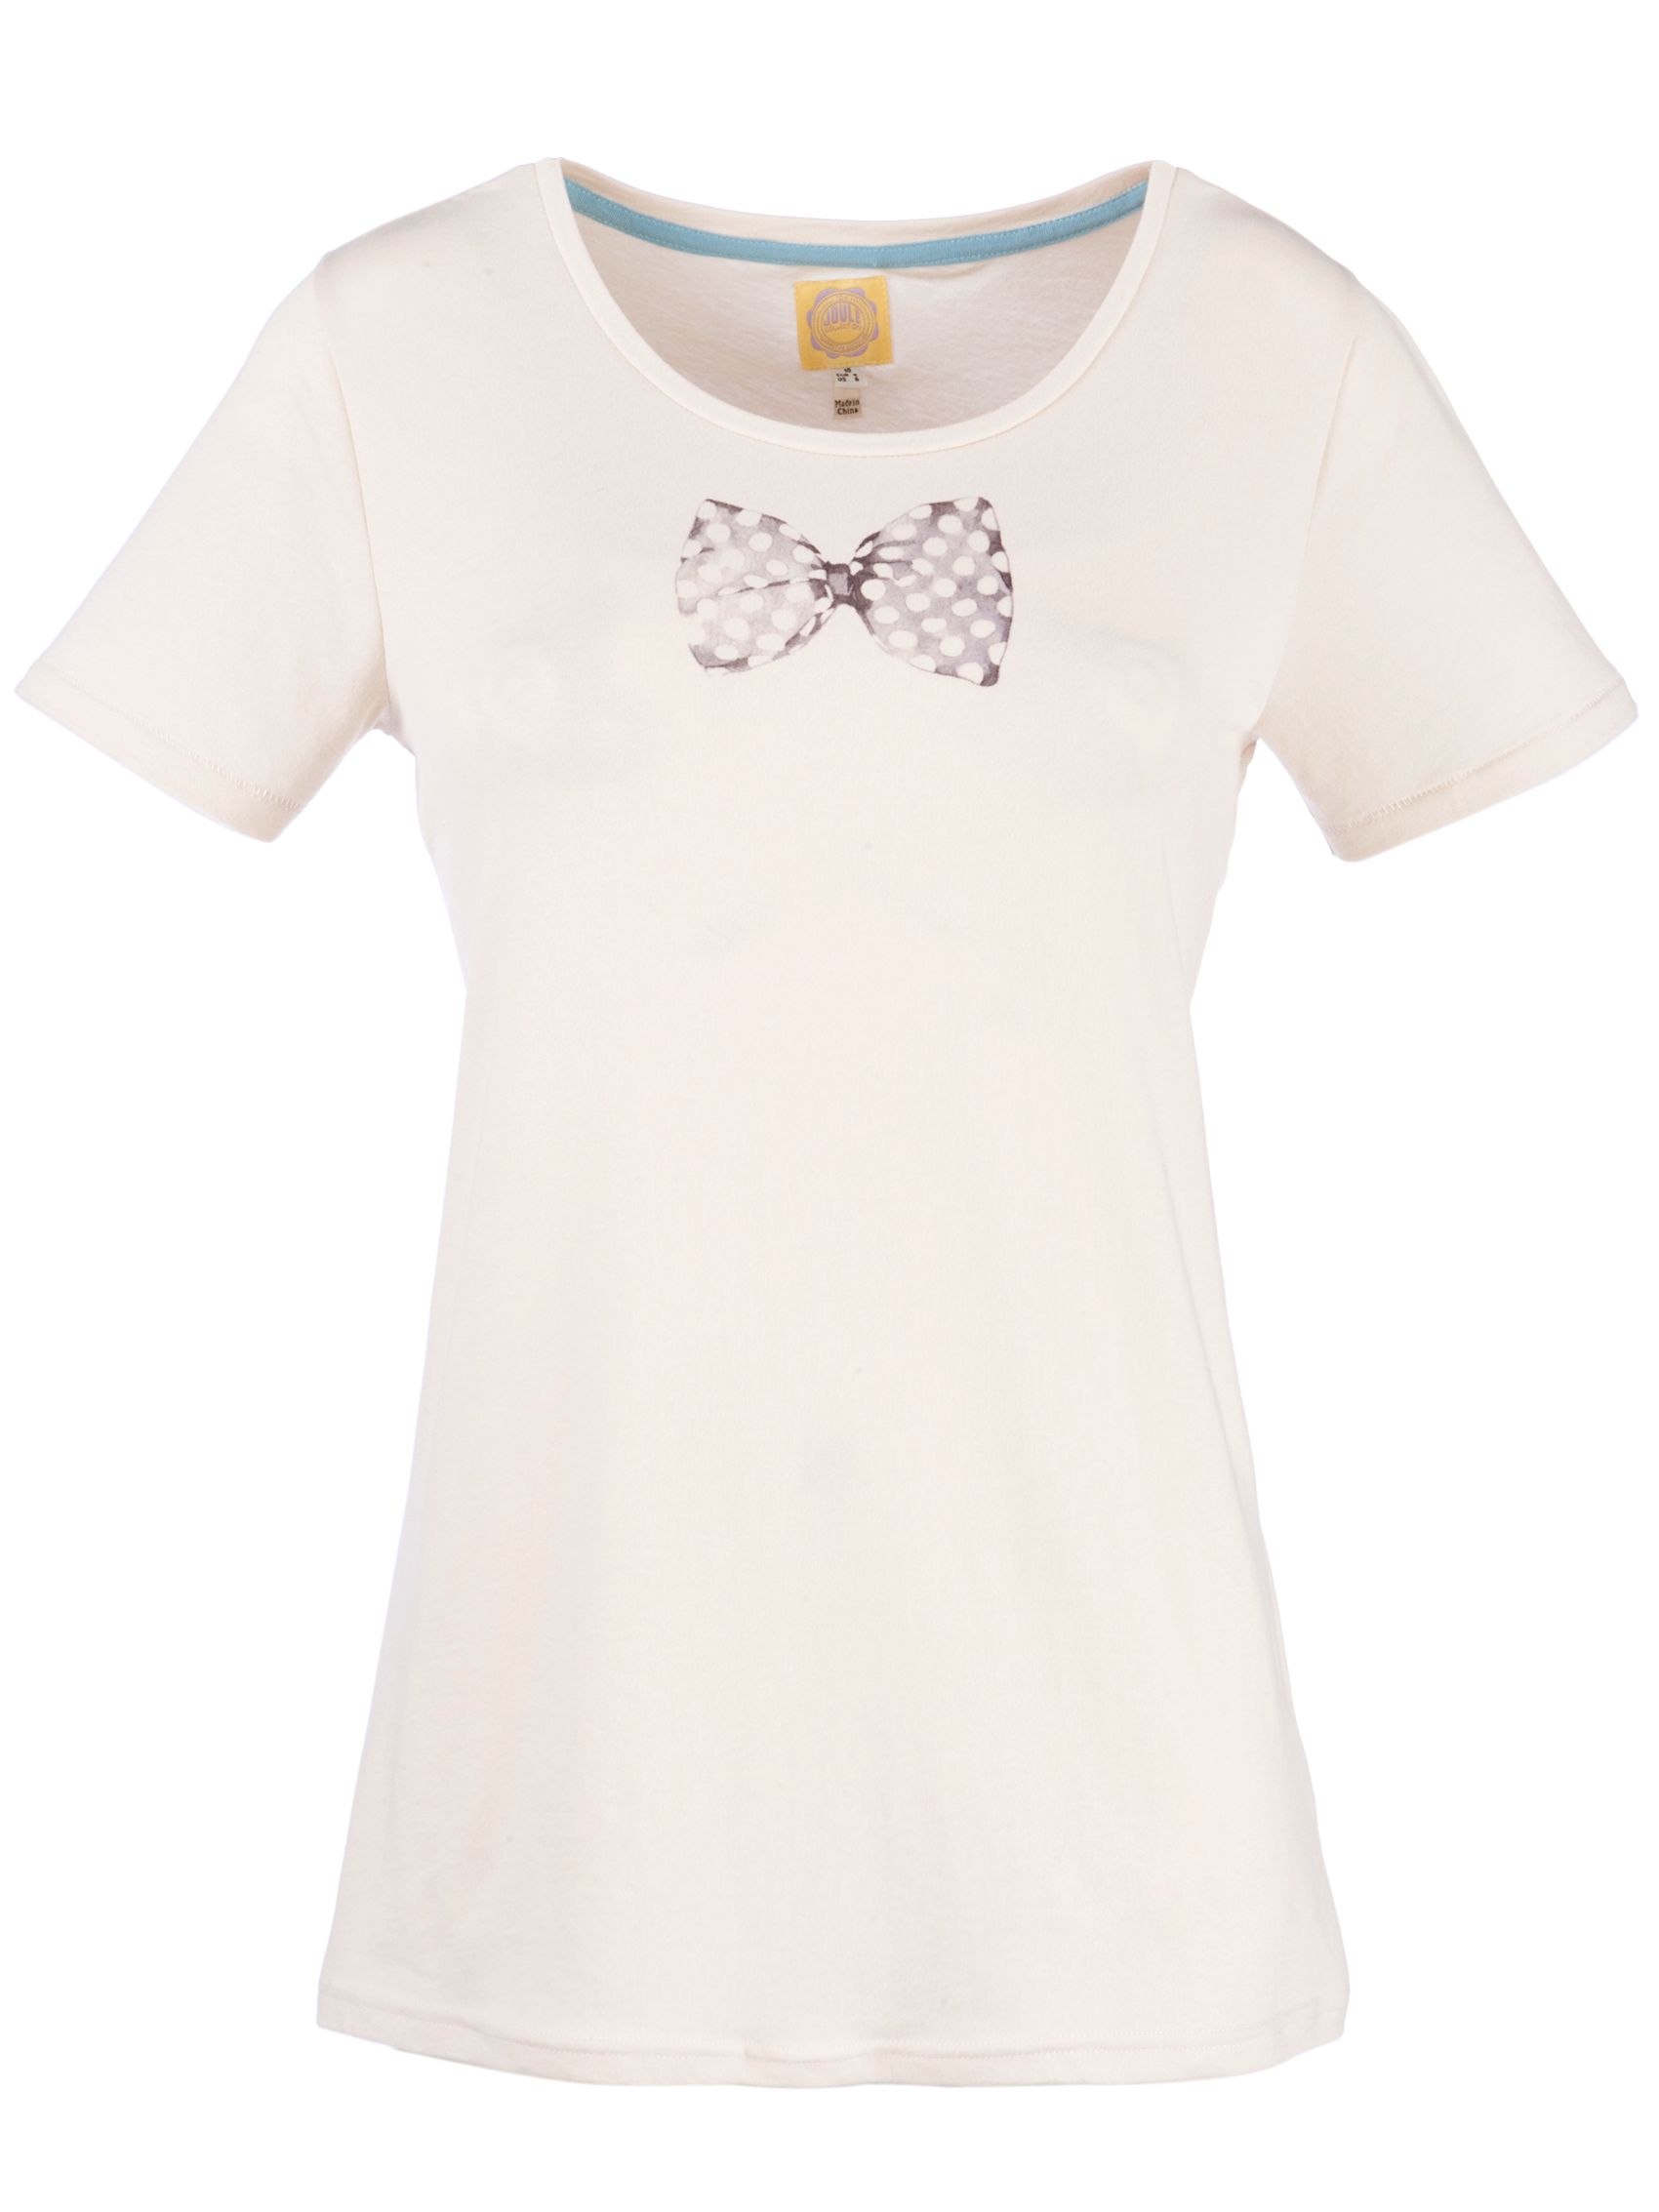 Anette Short Sleeve Bow Print T-Shirt,